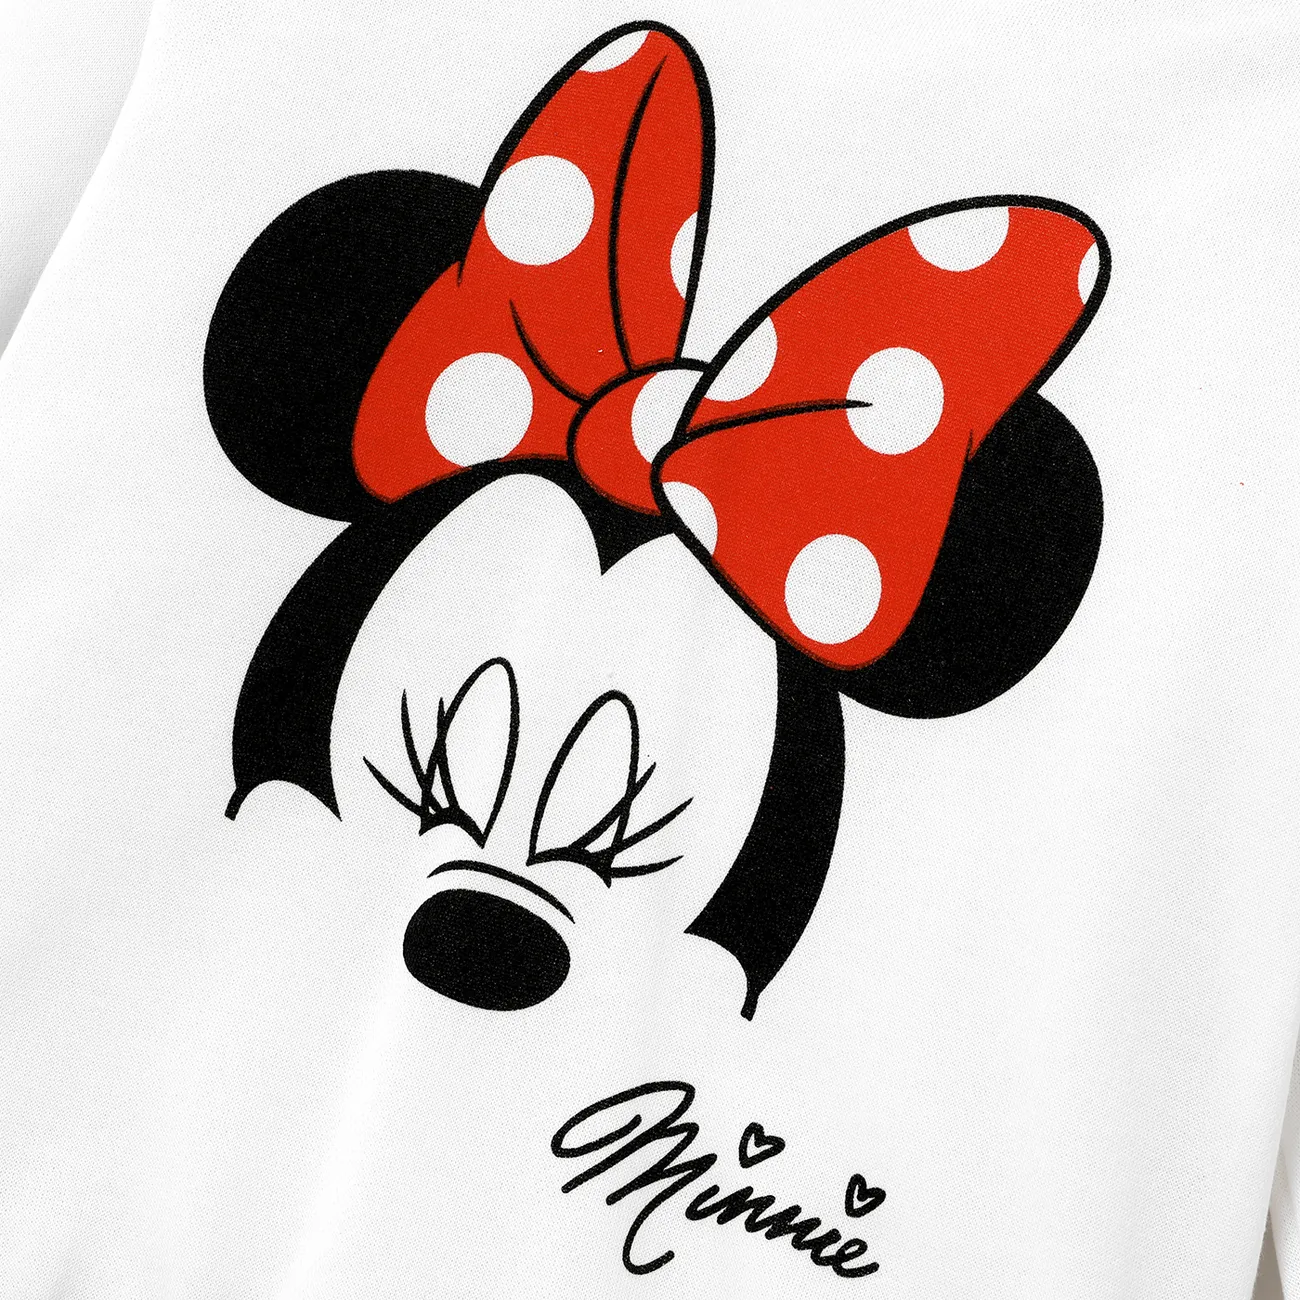 Disney Mickey and Friends Menina Com capuz Infantil Conjuntos Branco big image 1